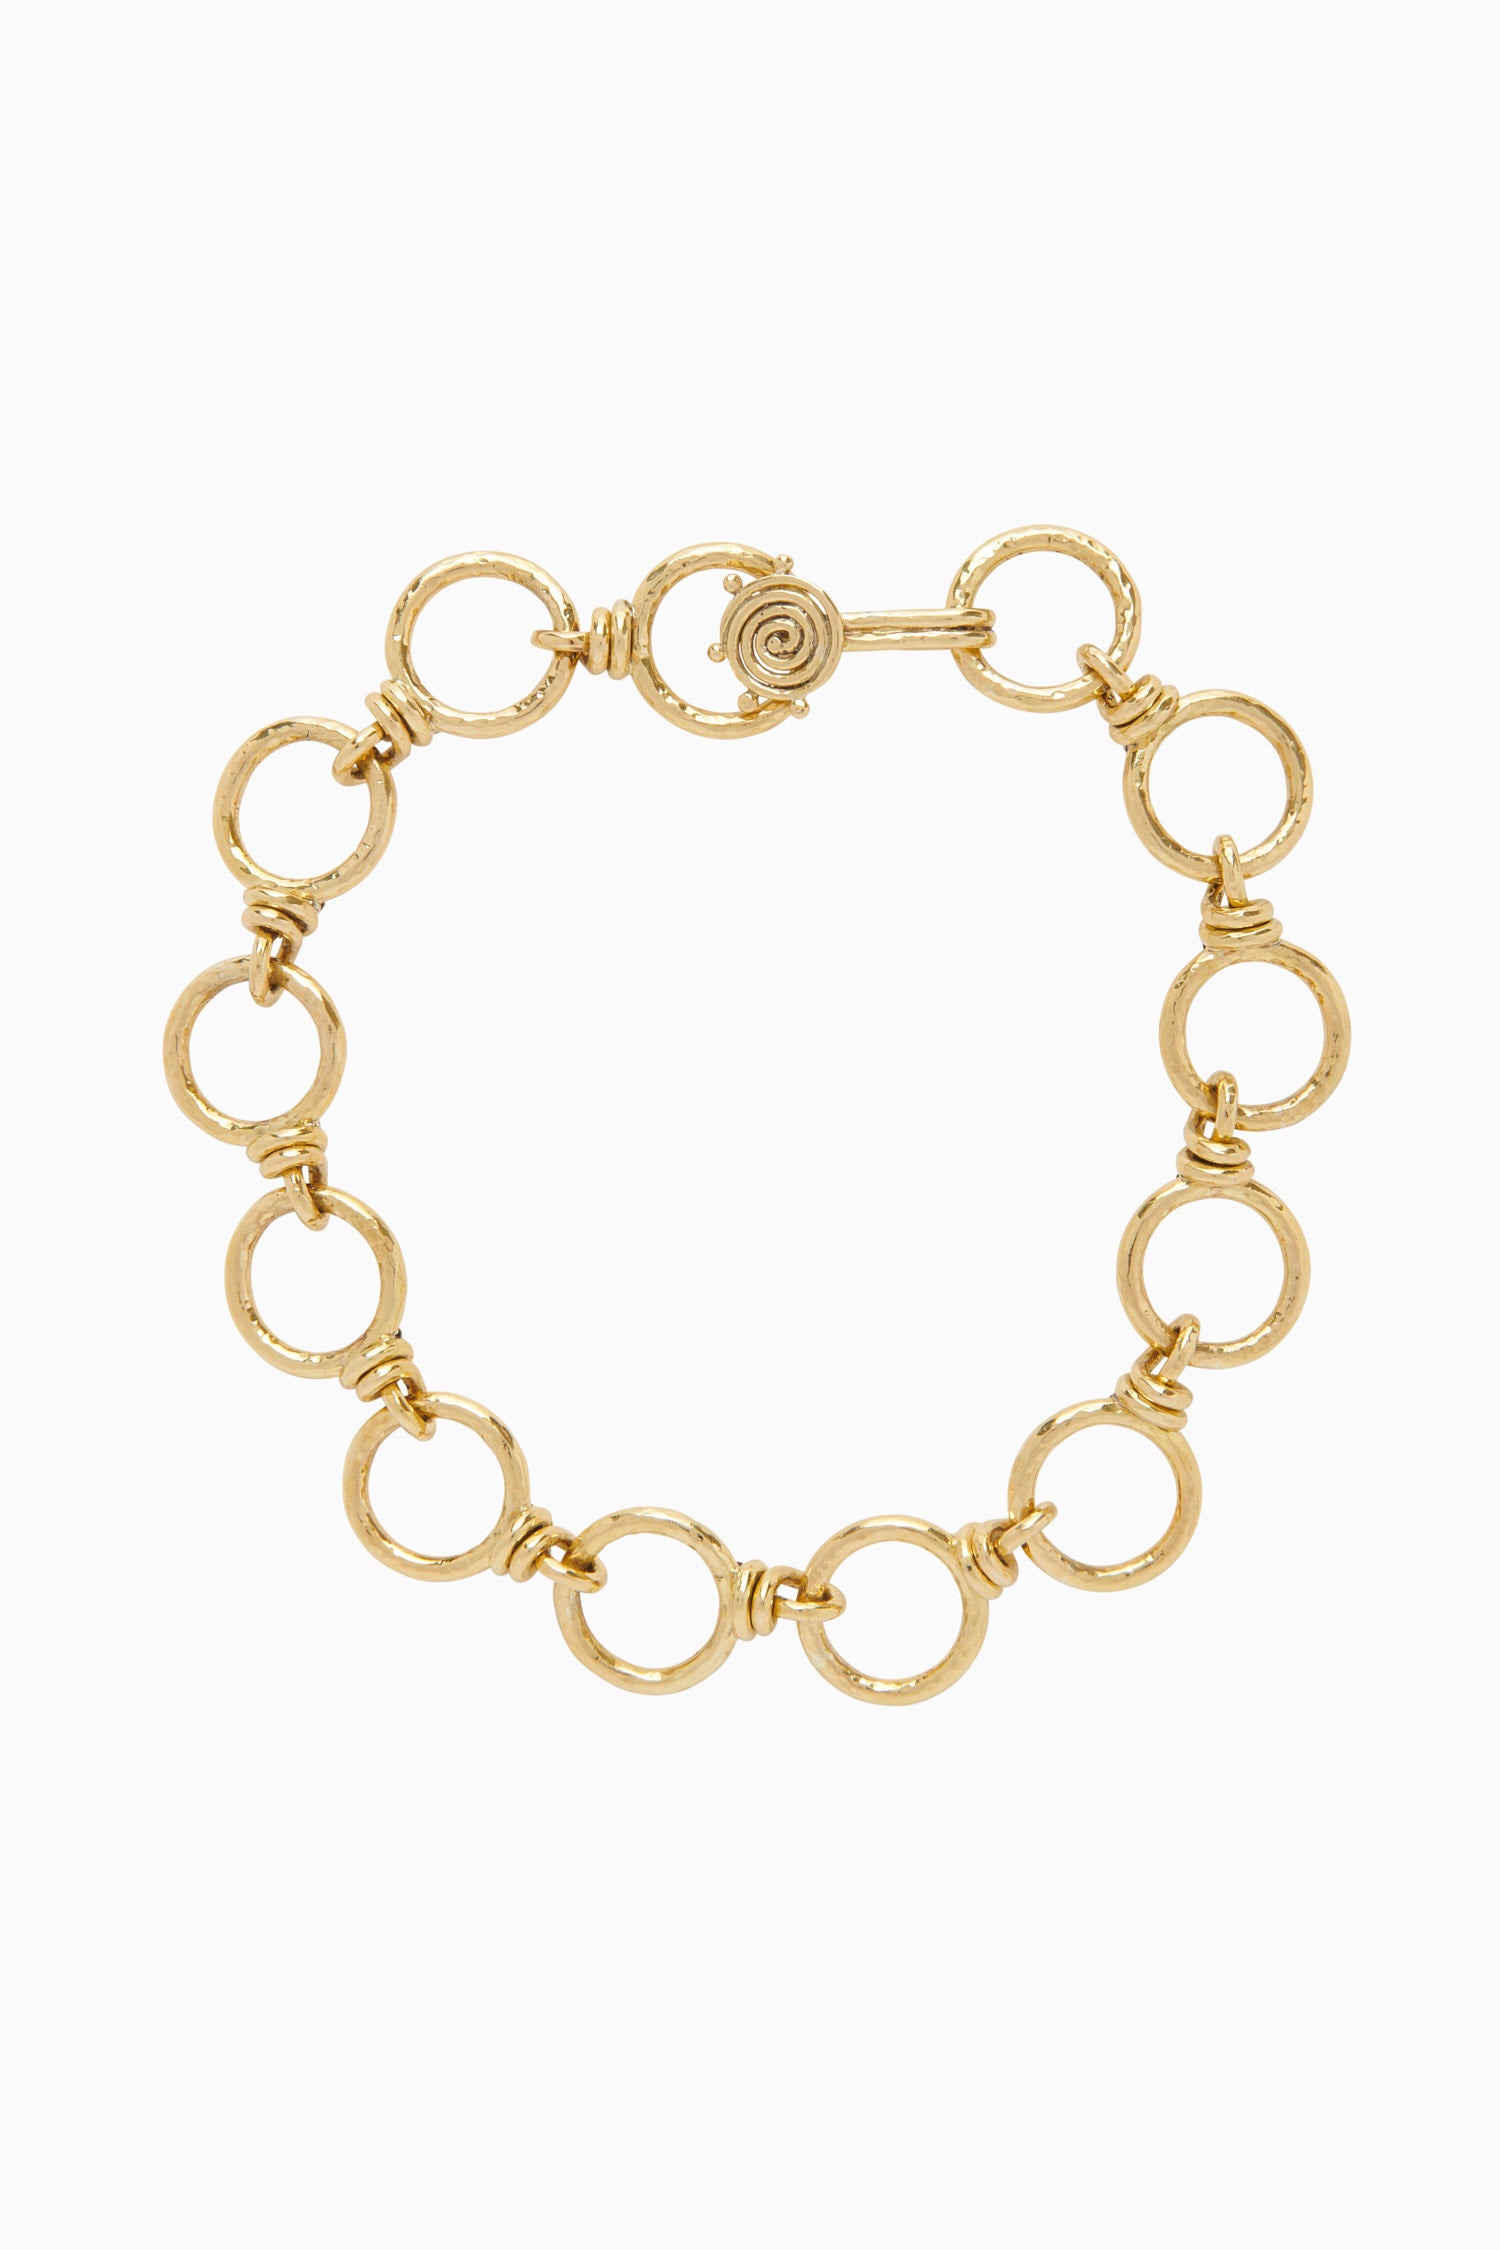 Hammered Circle Chain Necklace - Brass - Ulla Johnson